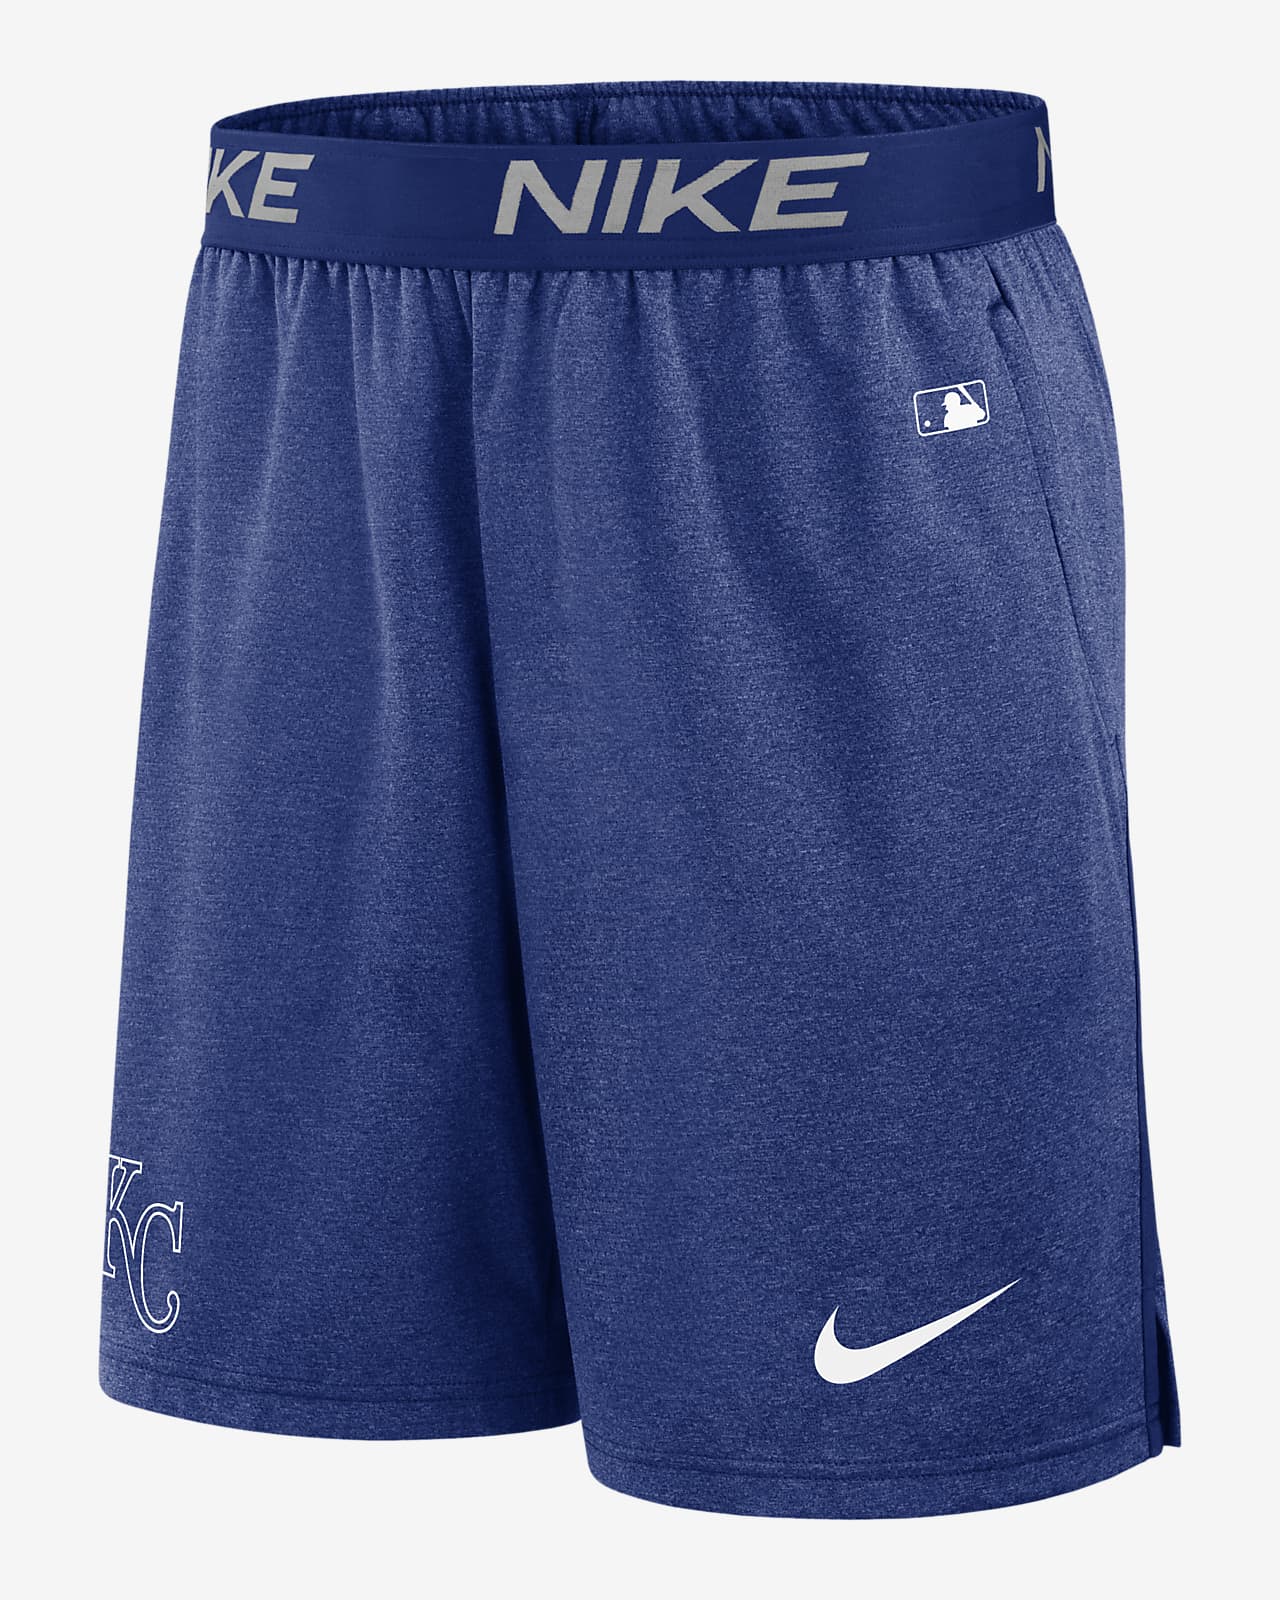 Kansas City Royals Authentic Collection Practice Men's Nike Dri-FIT MLB Shorts